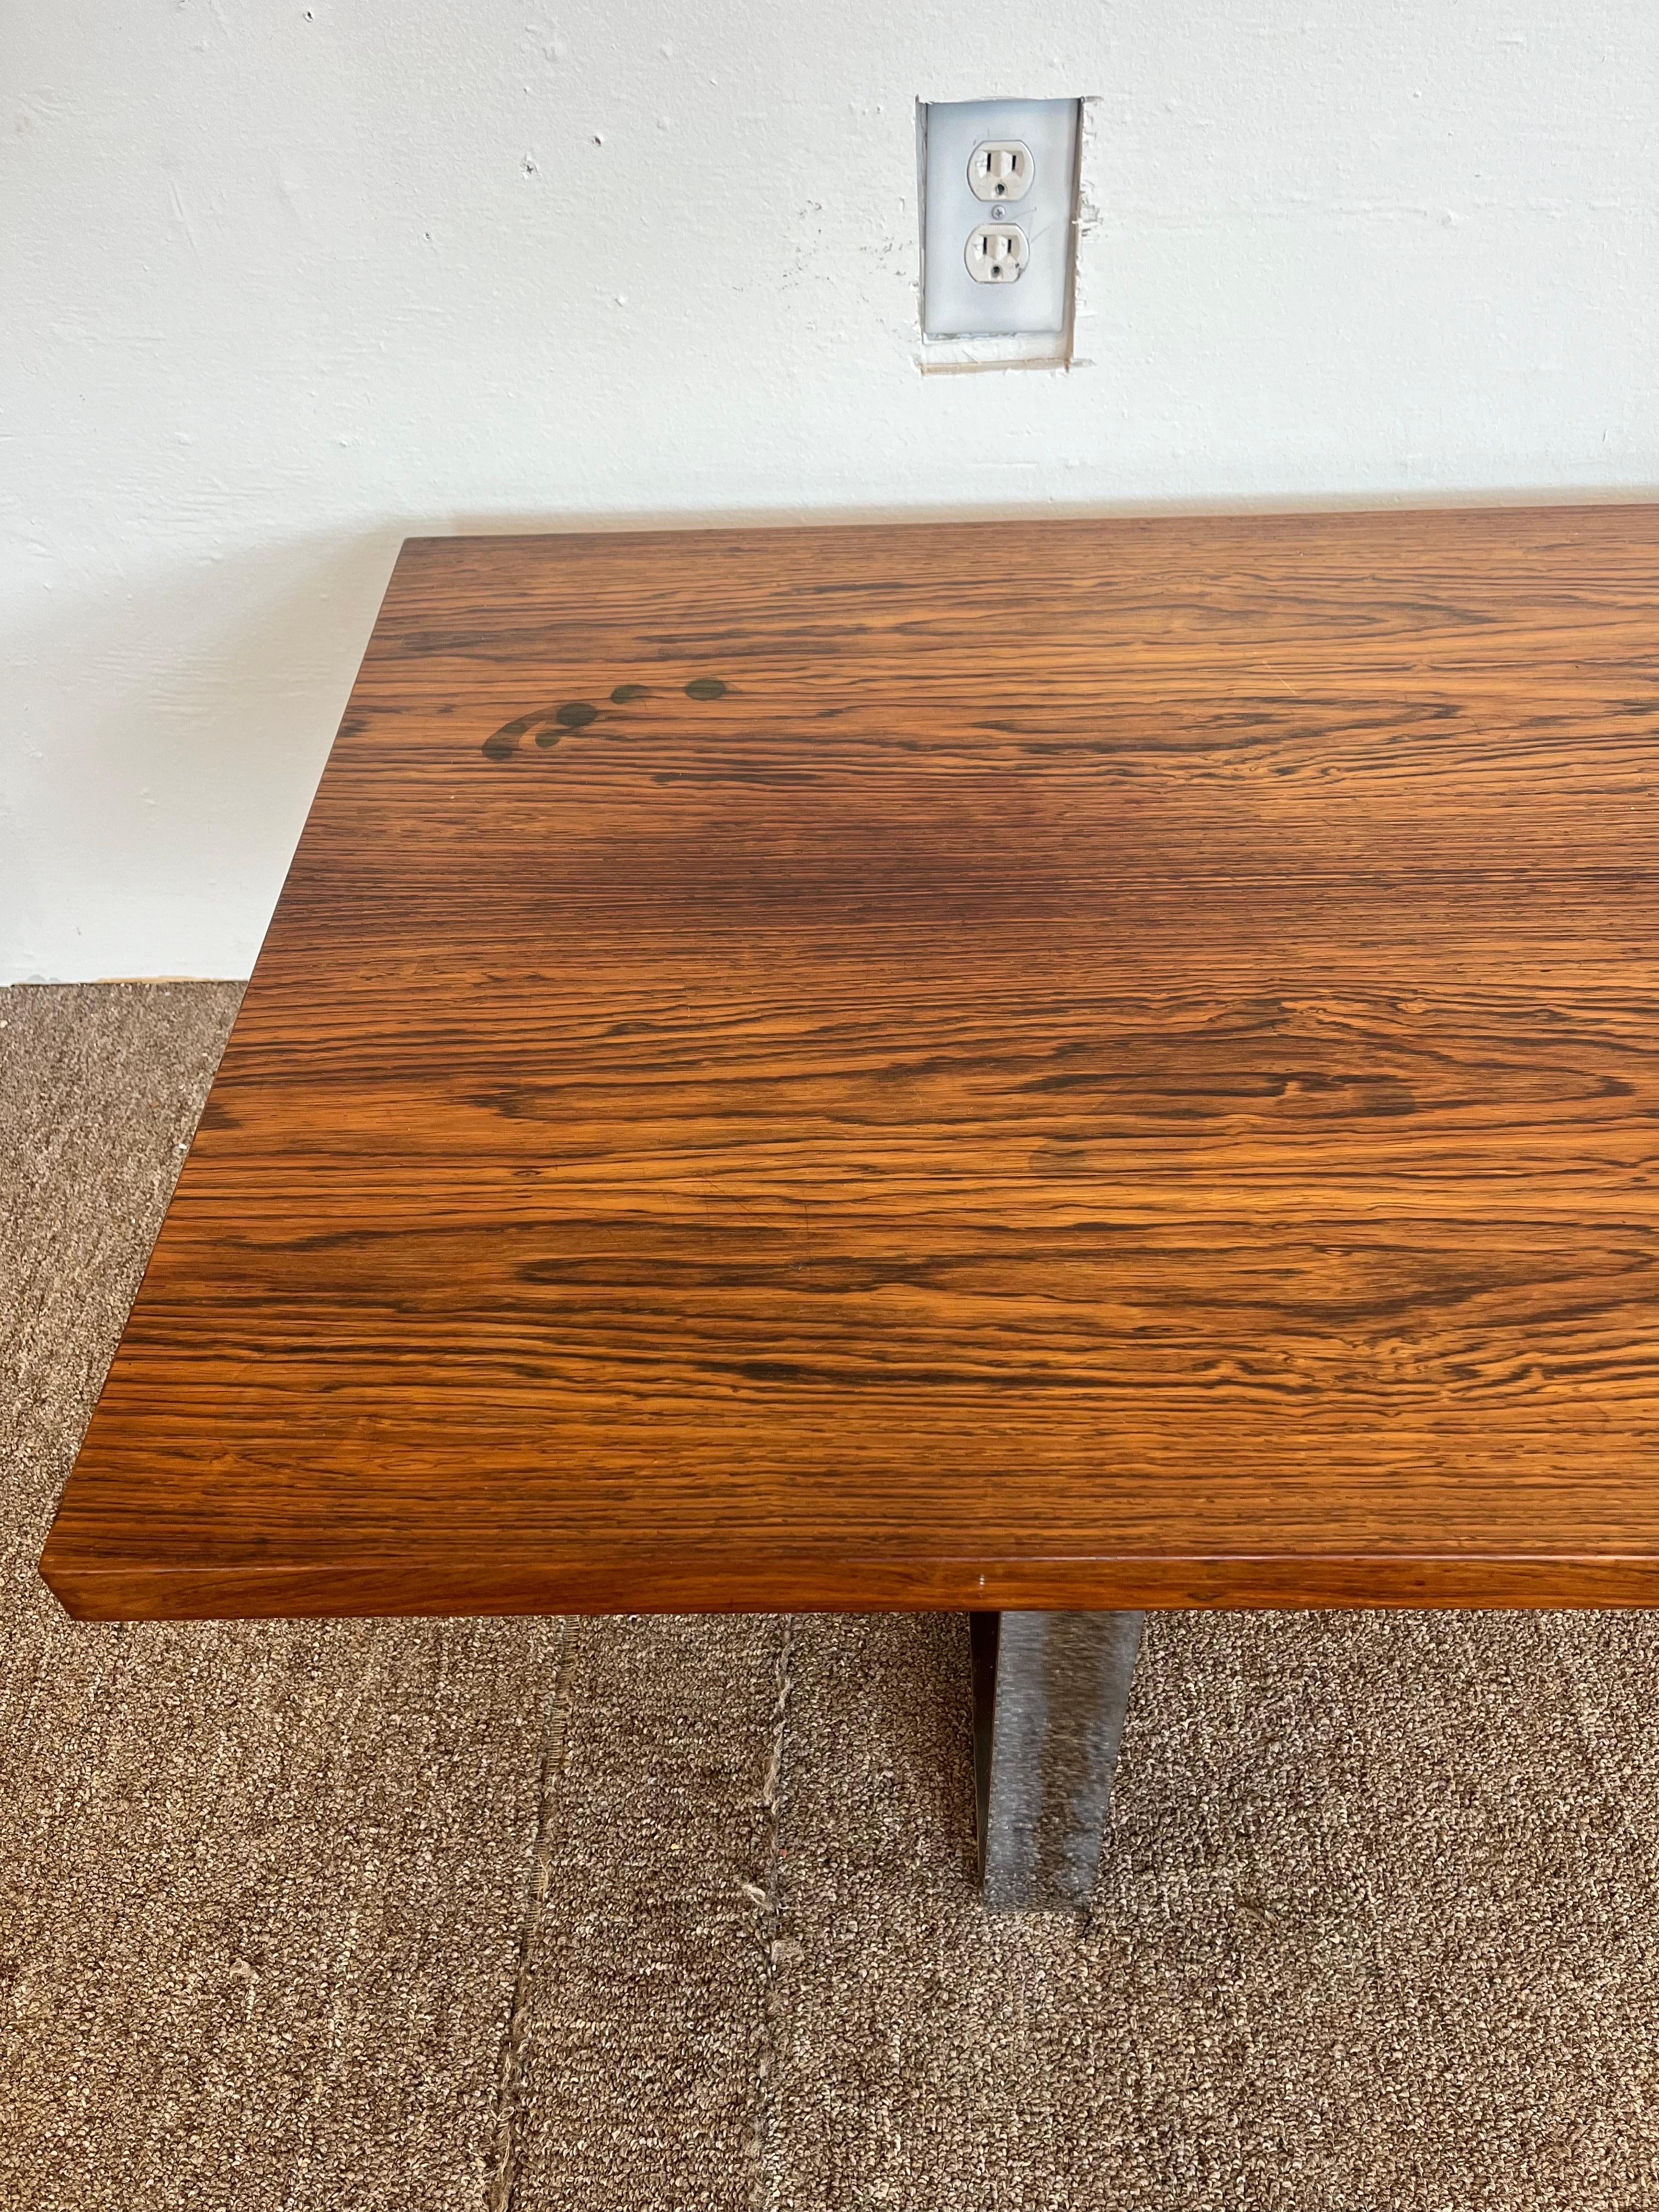 Bodil Kjaer for E. Pedersen Danish Modern Bench or Coffee Table Wood and Chrome For Sale 6